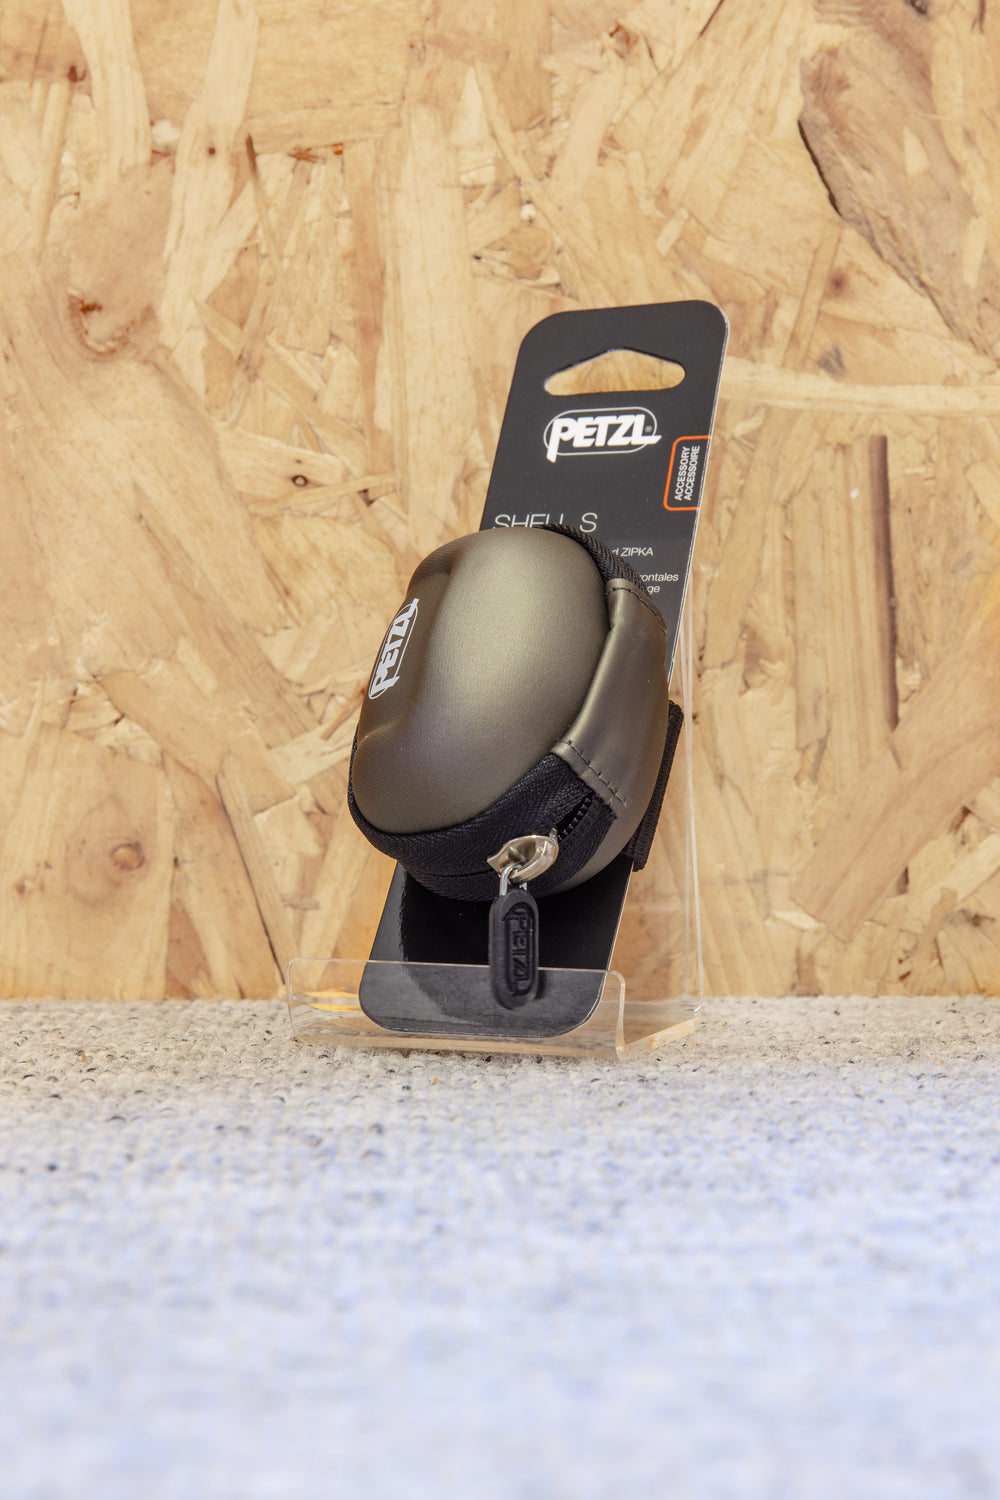 Petzl - SHELL (Headlamp Case)